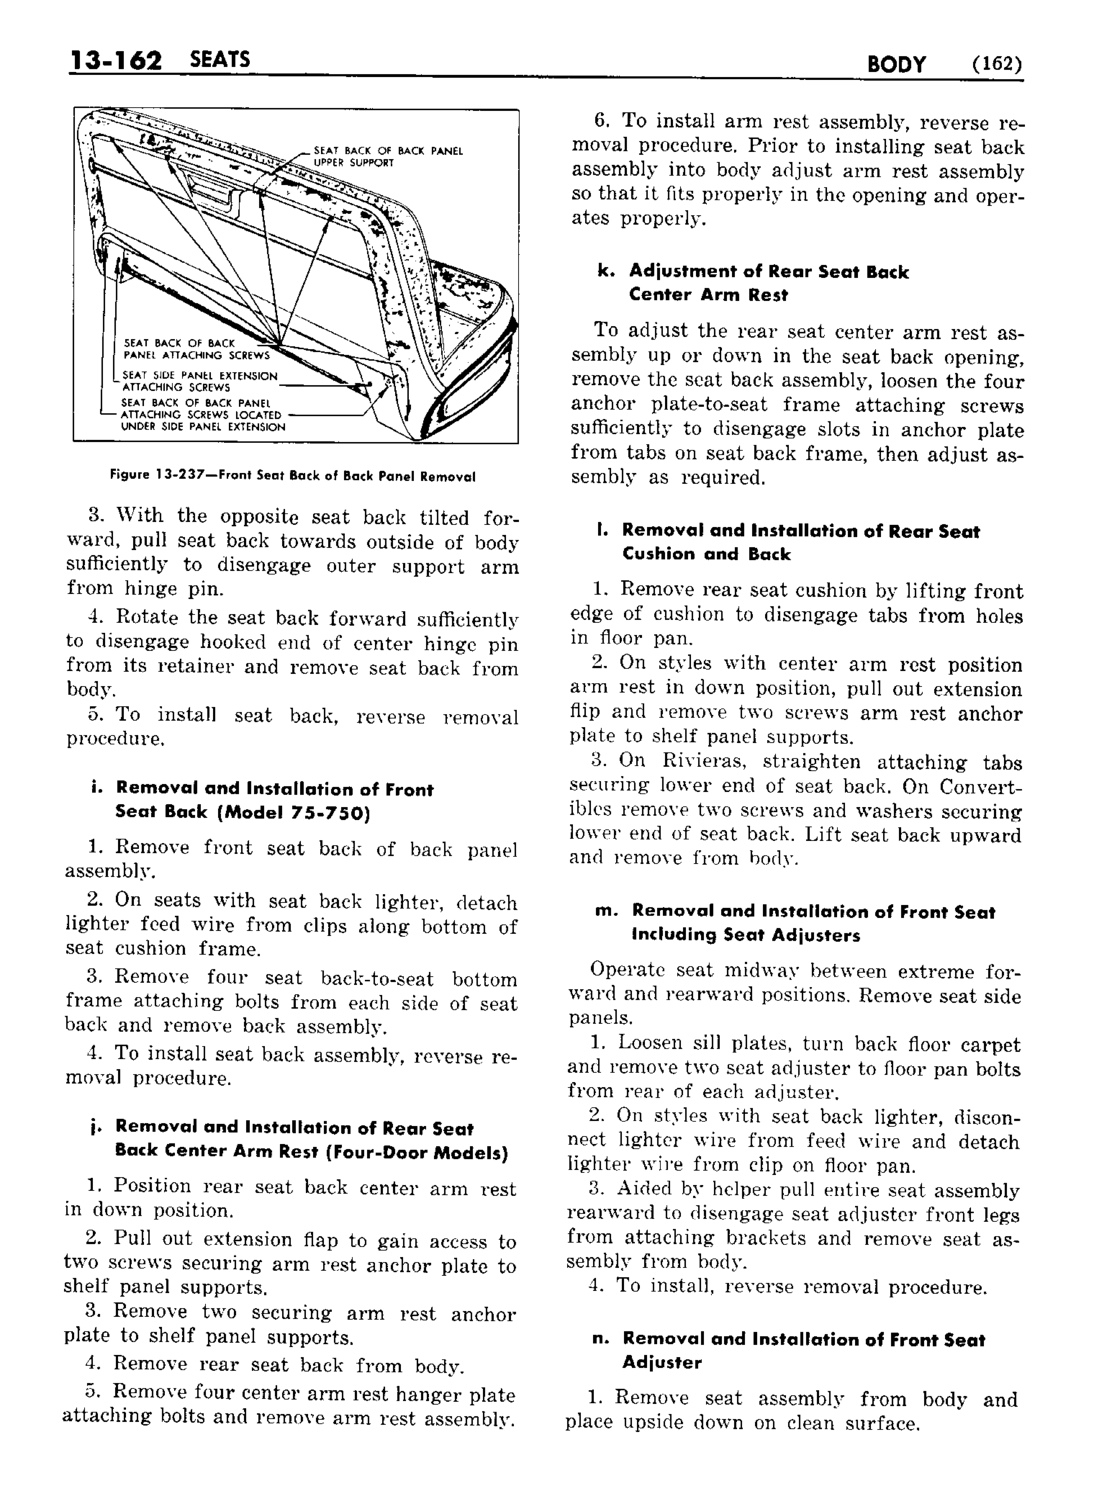 n_1958 Buick Body Service Manual-163-163.jpg